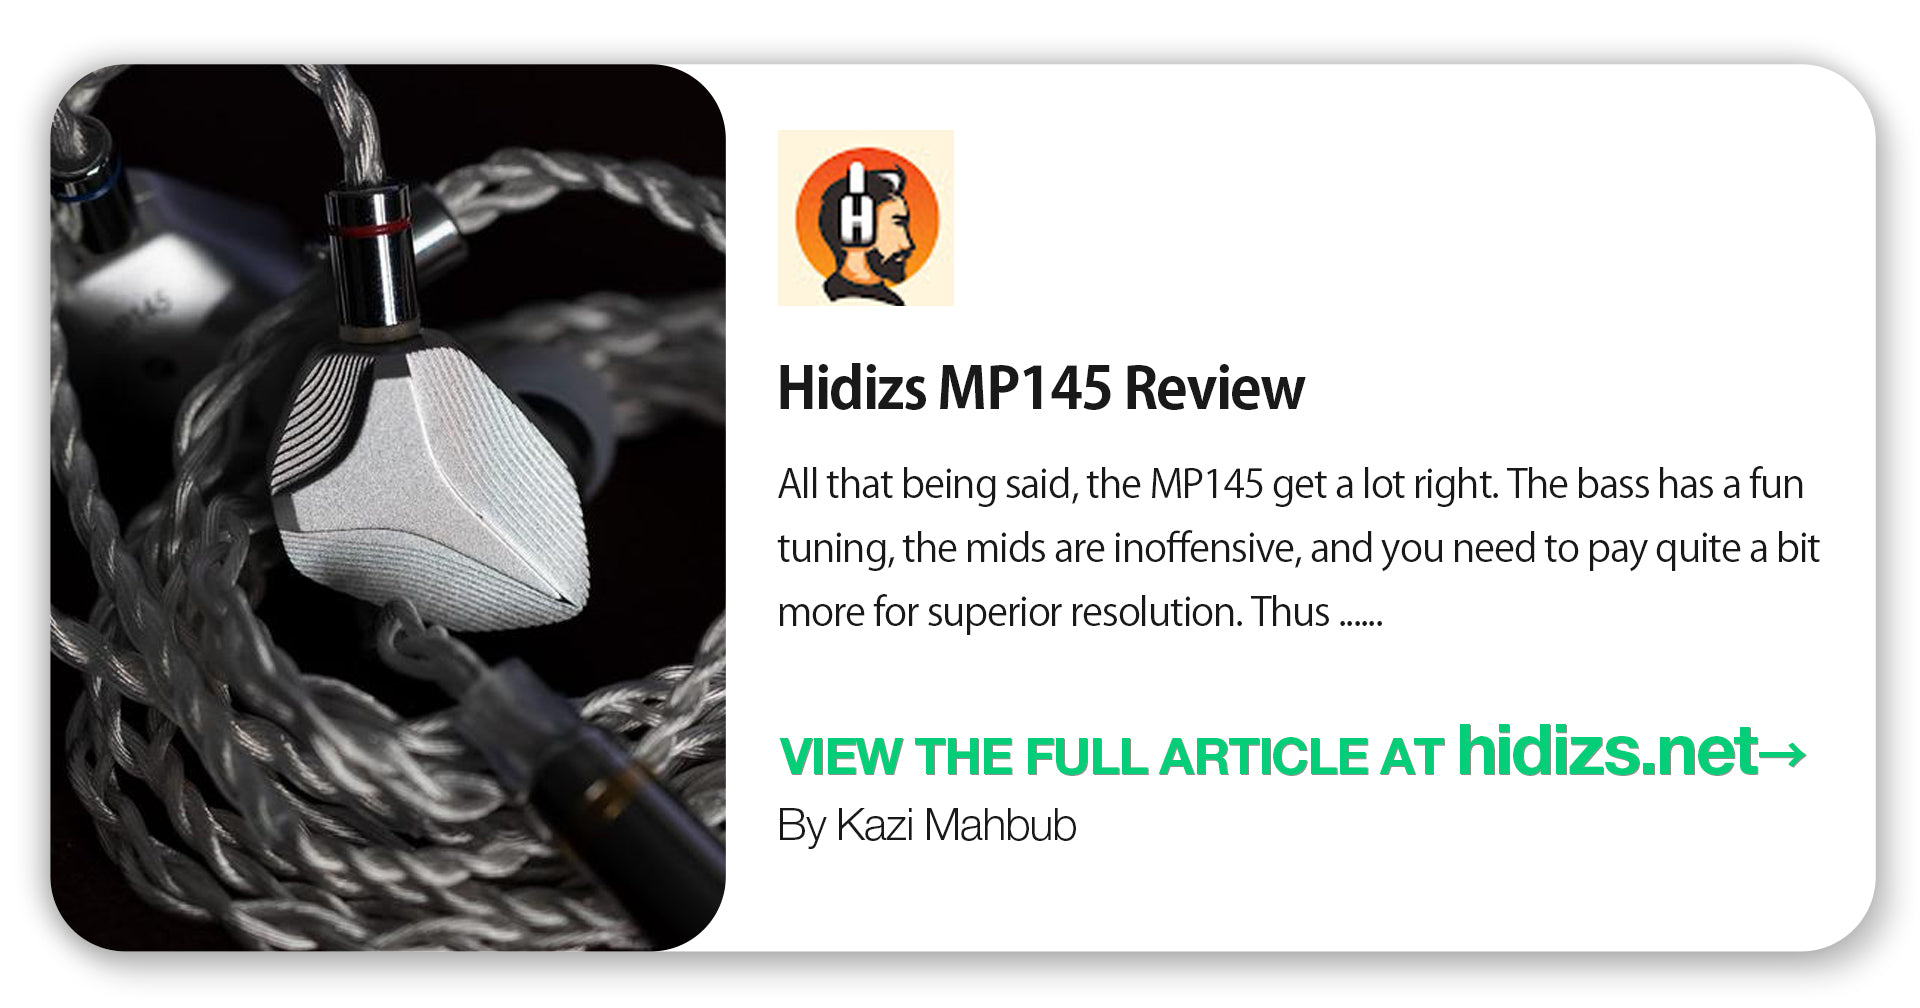 Hidizs MP145 Review - Kmmbd/Kazi Mahbub